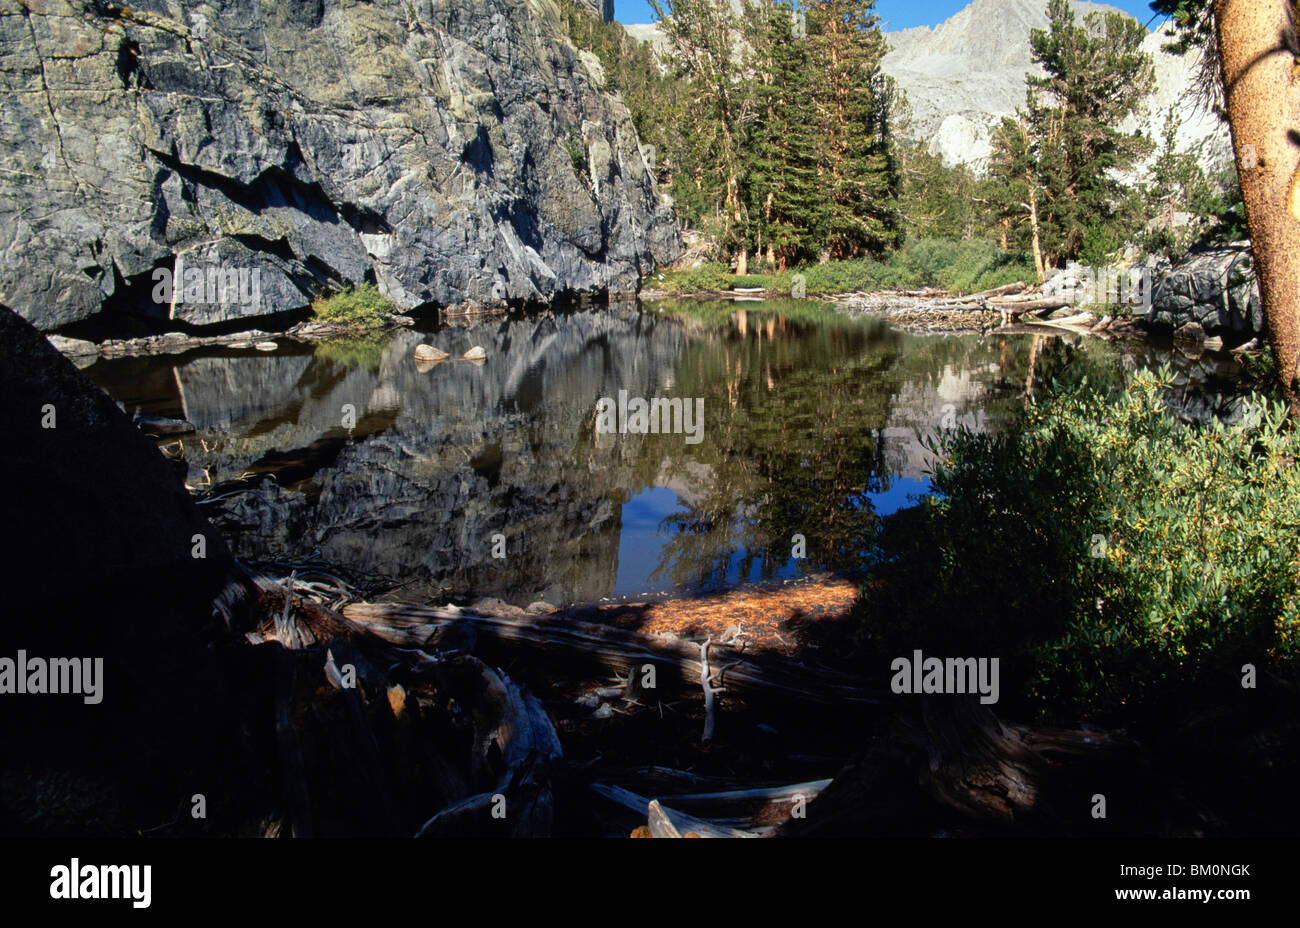 Reflection of a cliff in a lake, Brainard Lake, John Muir Wilderness, California, USA Stock Photo